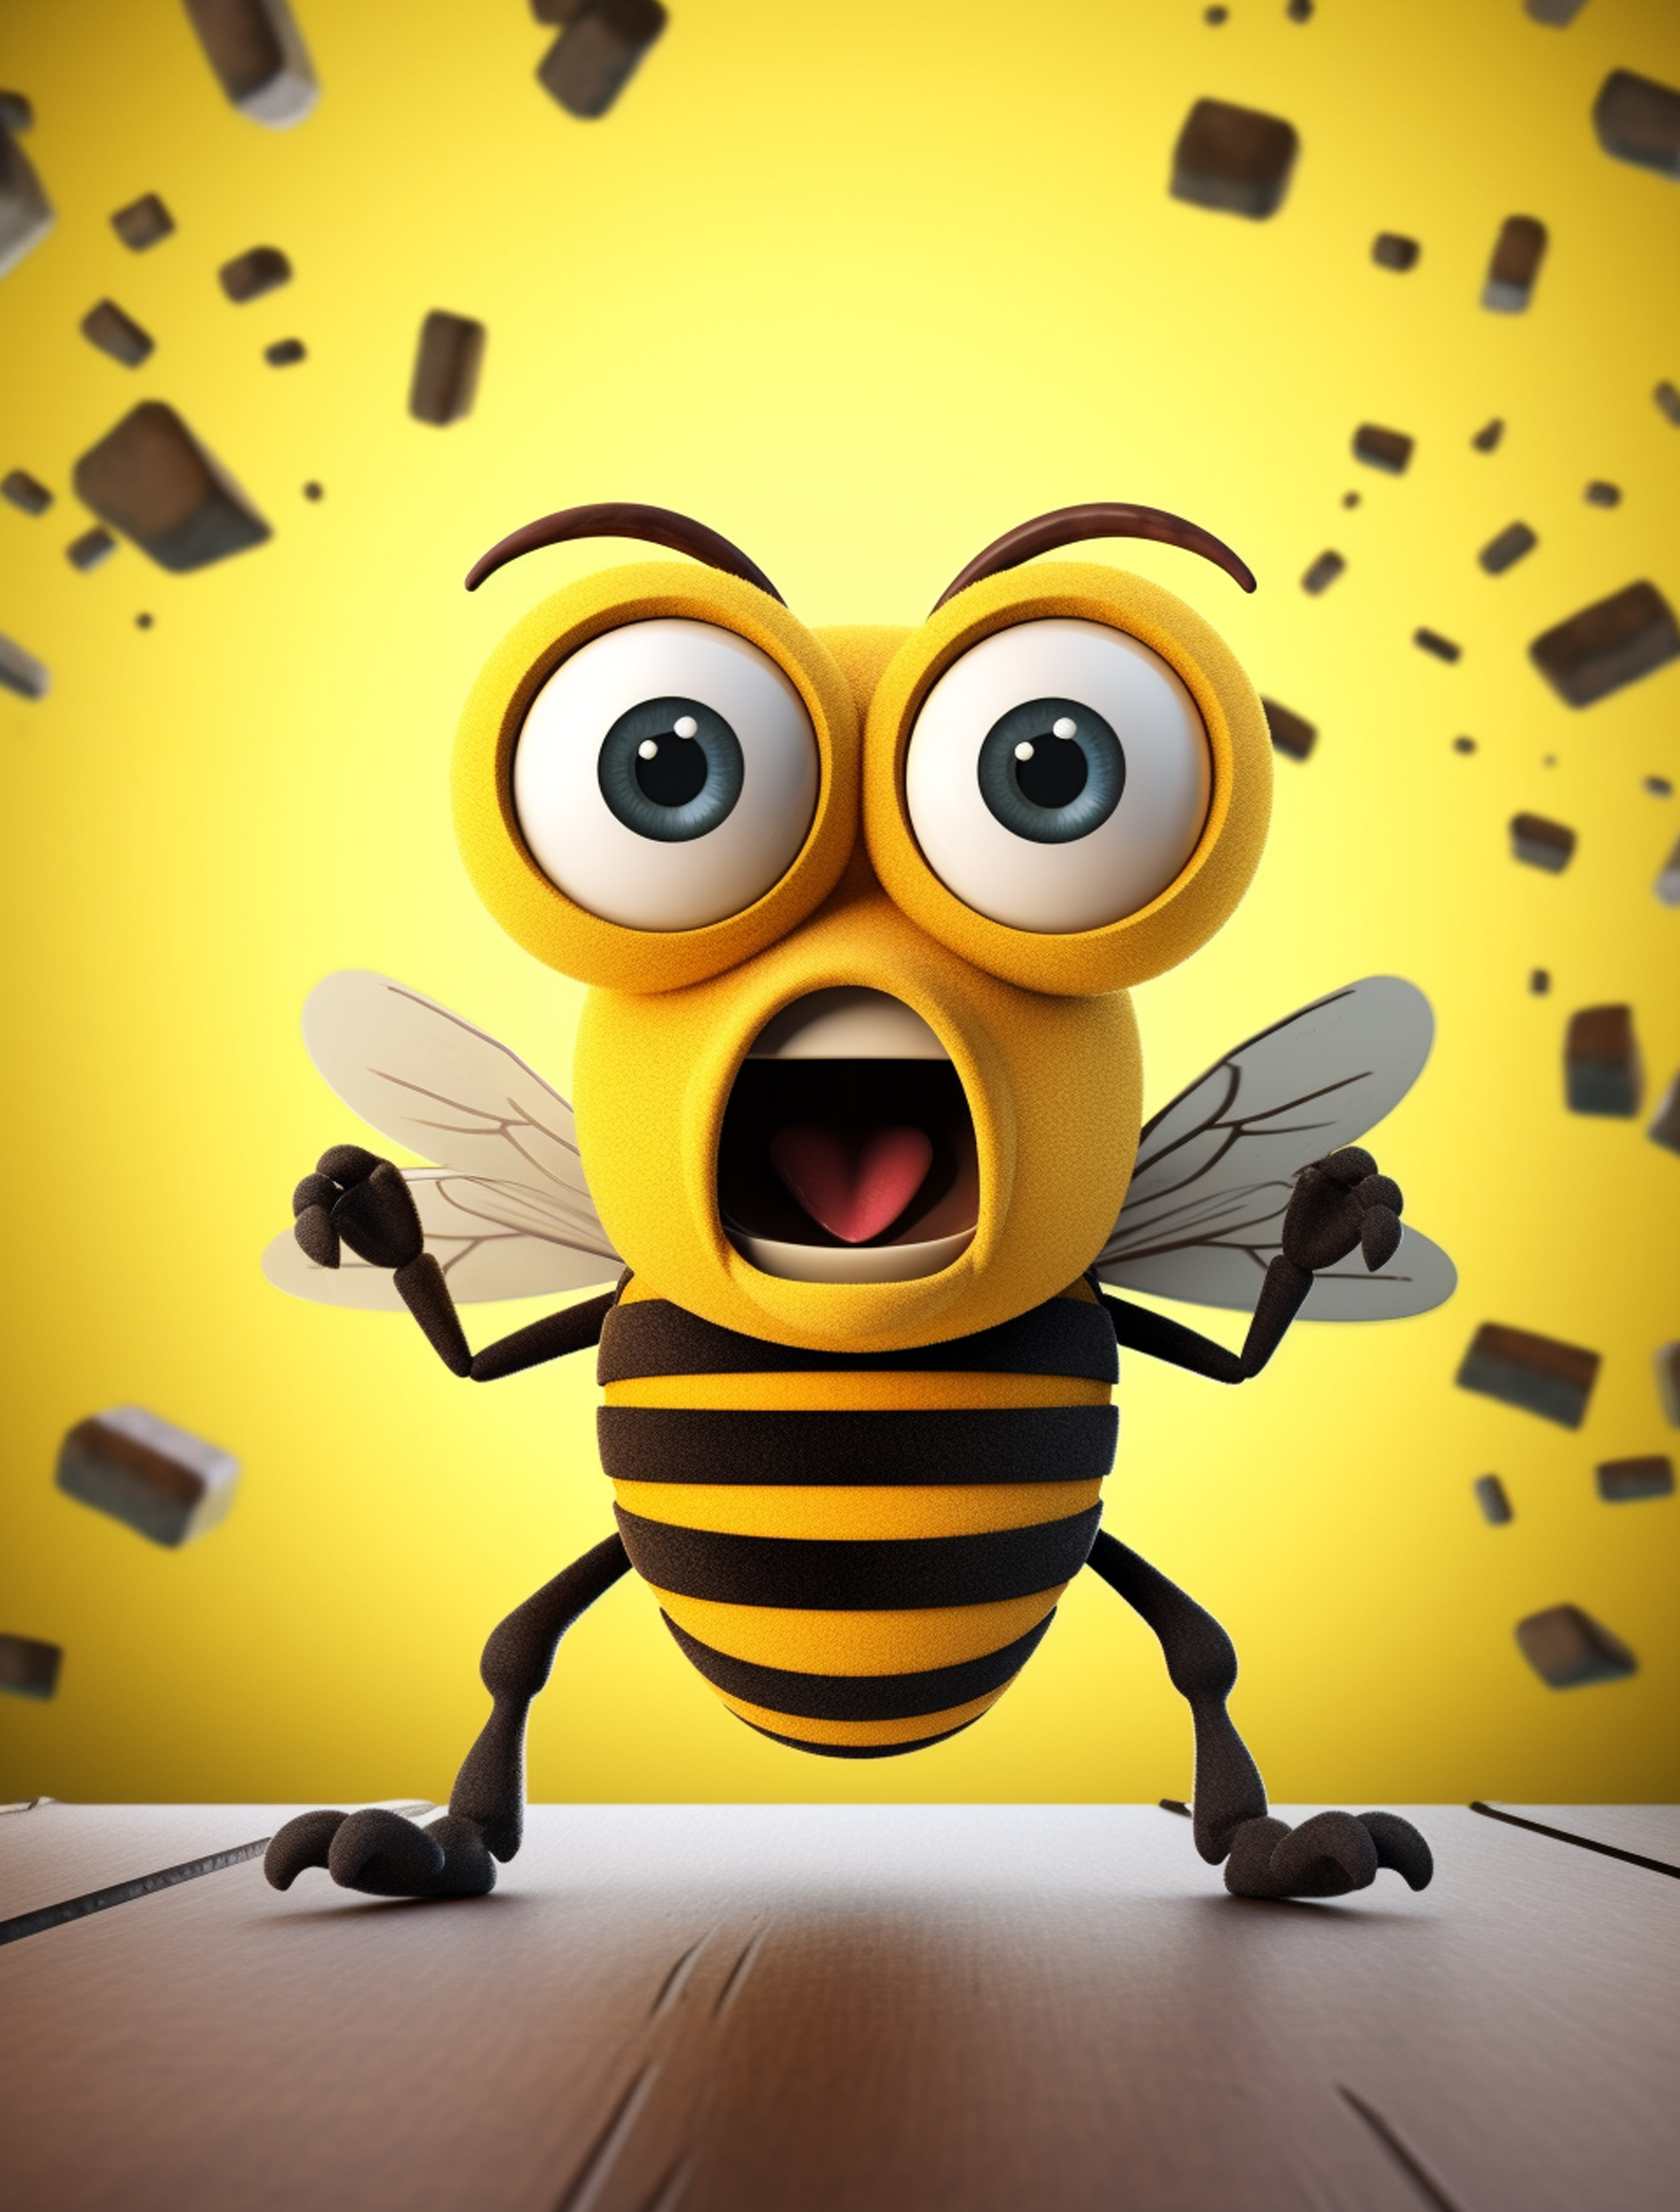 vue-abeille-personnage-dessin-anime-3d.jpg